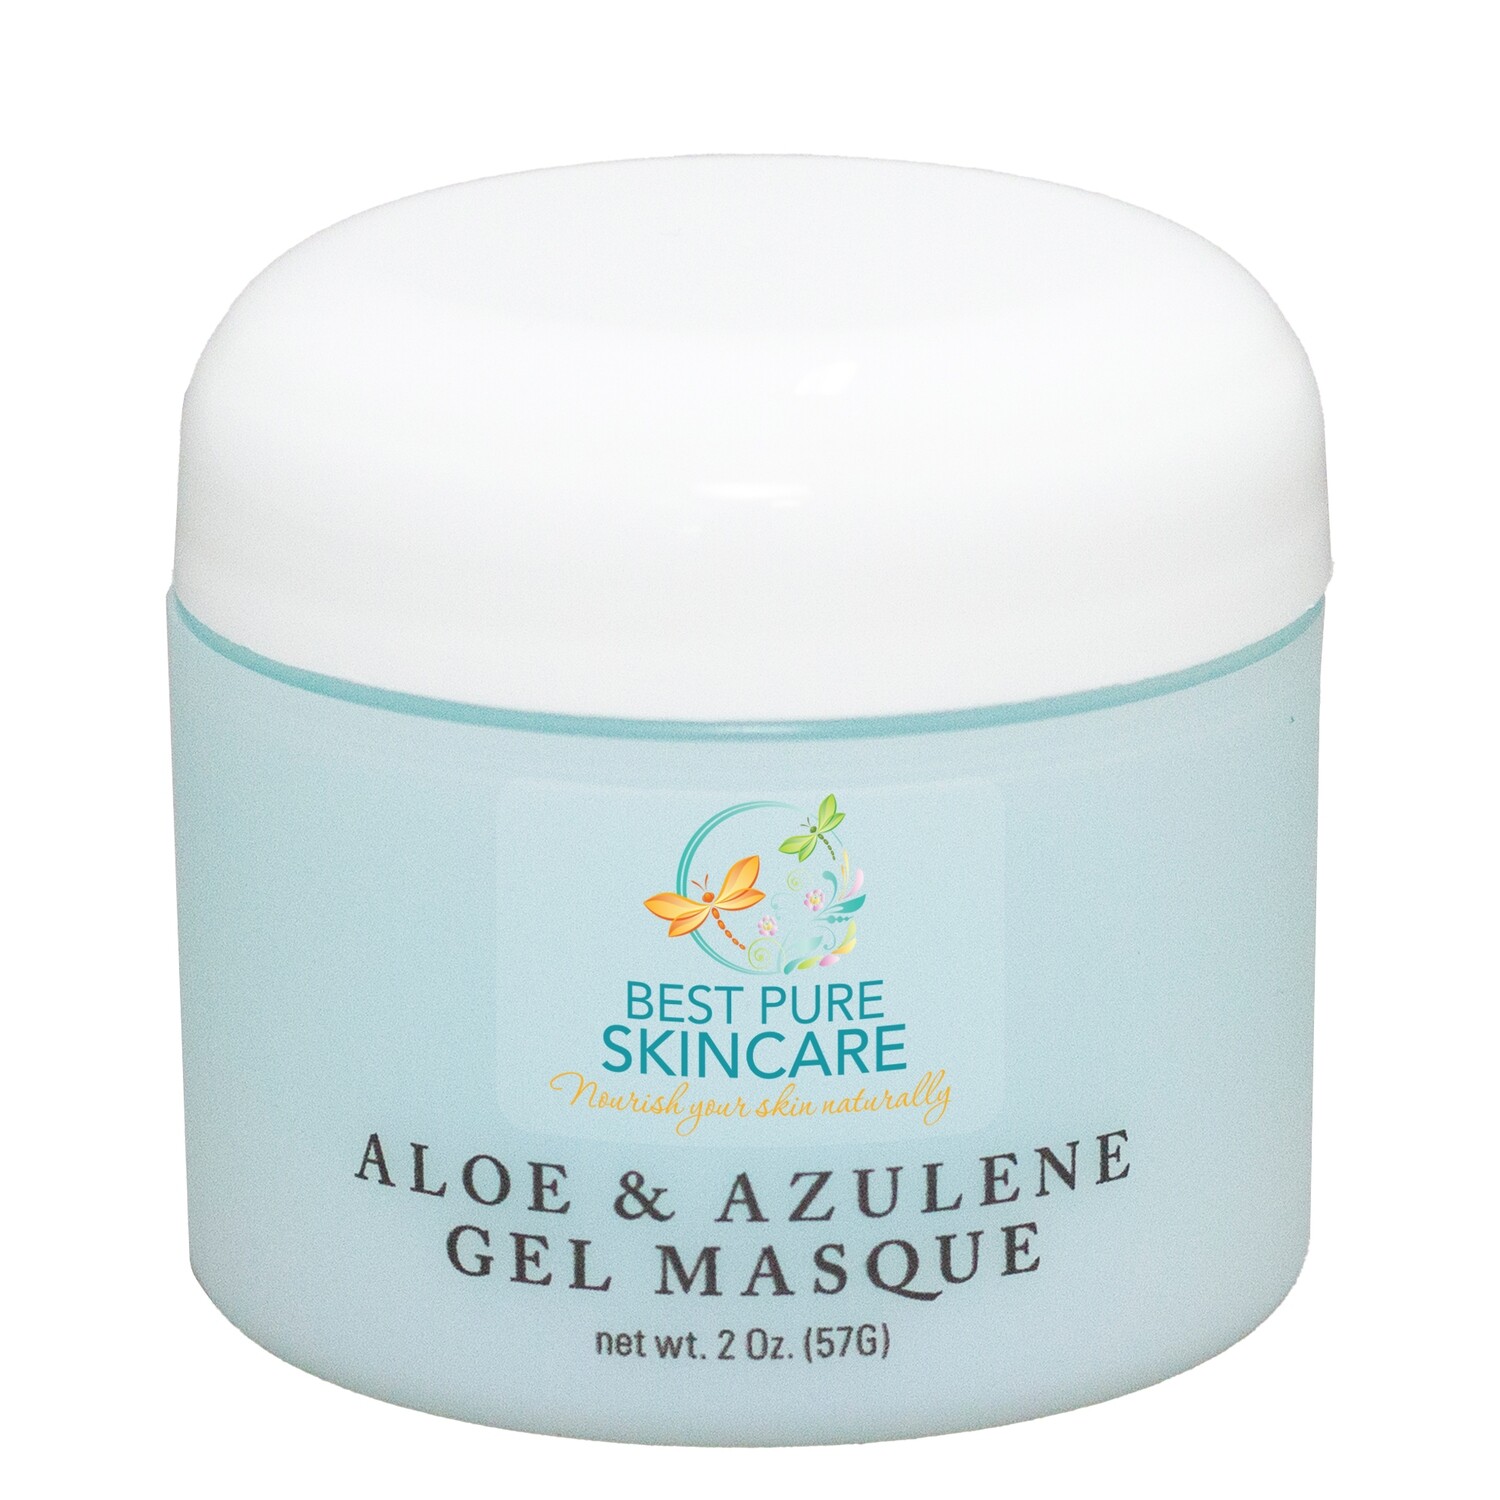 Aloe & Azulene Gel Masque